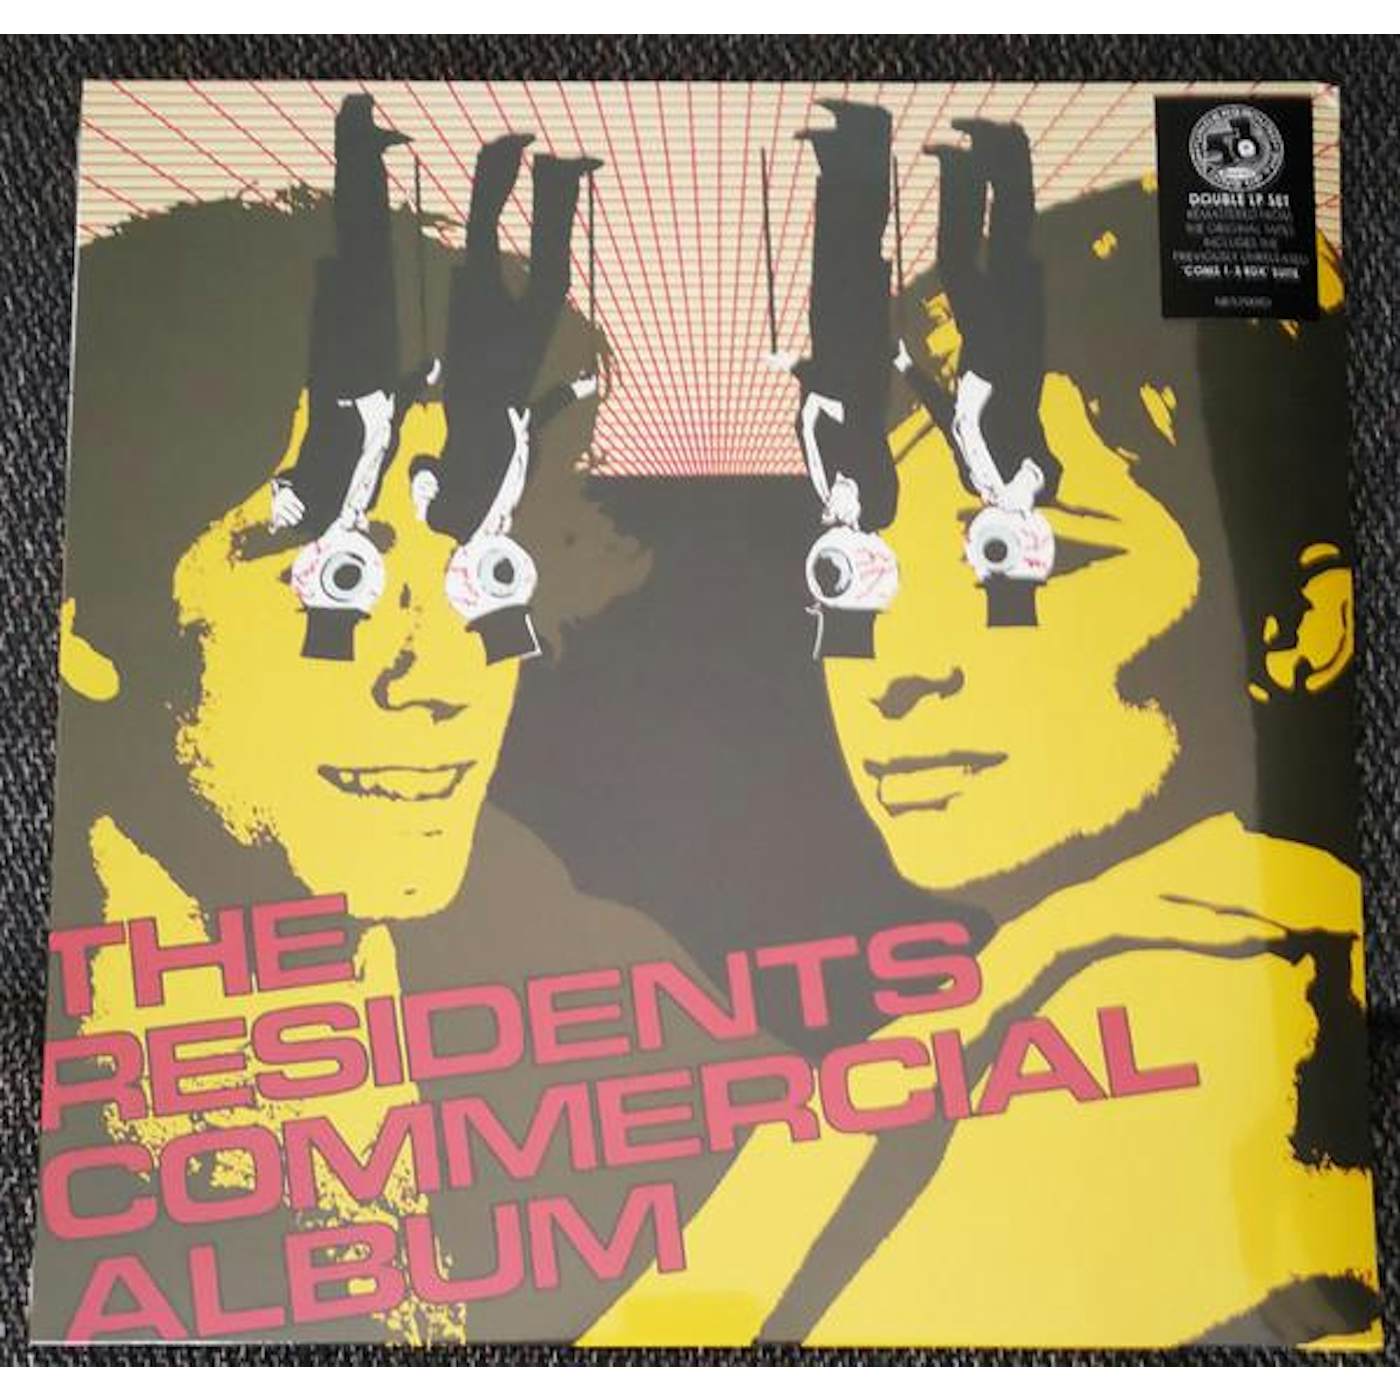 The Residents COMMERCIAL ALBUM Vinyl Record